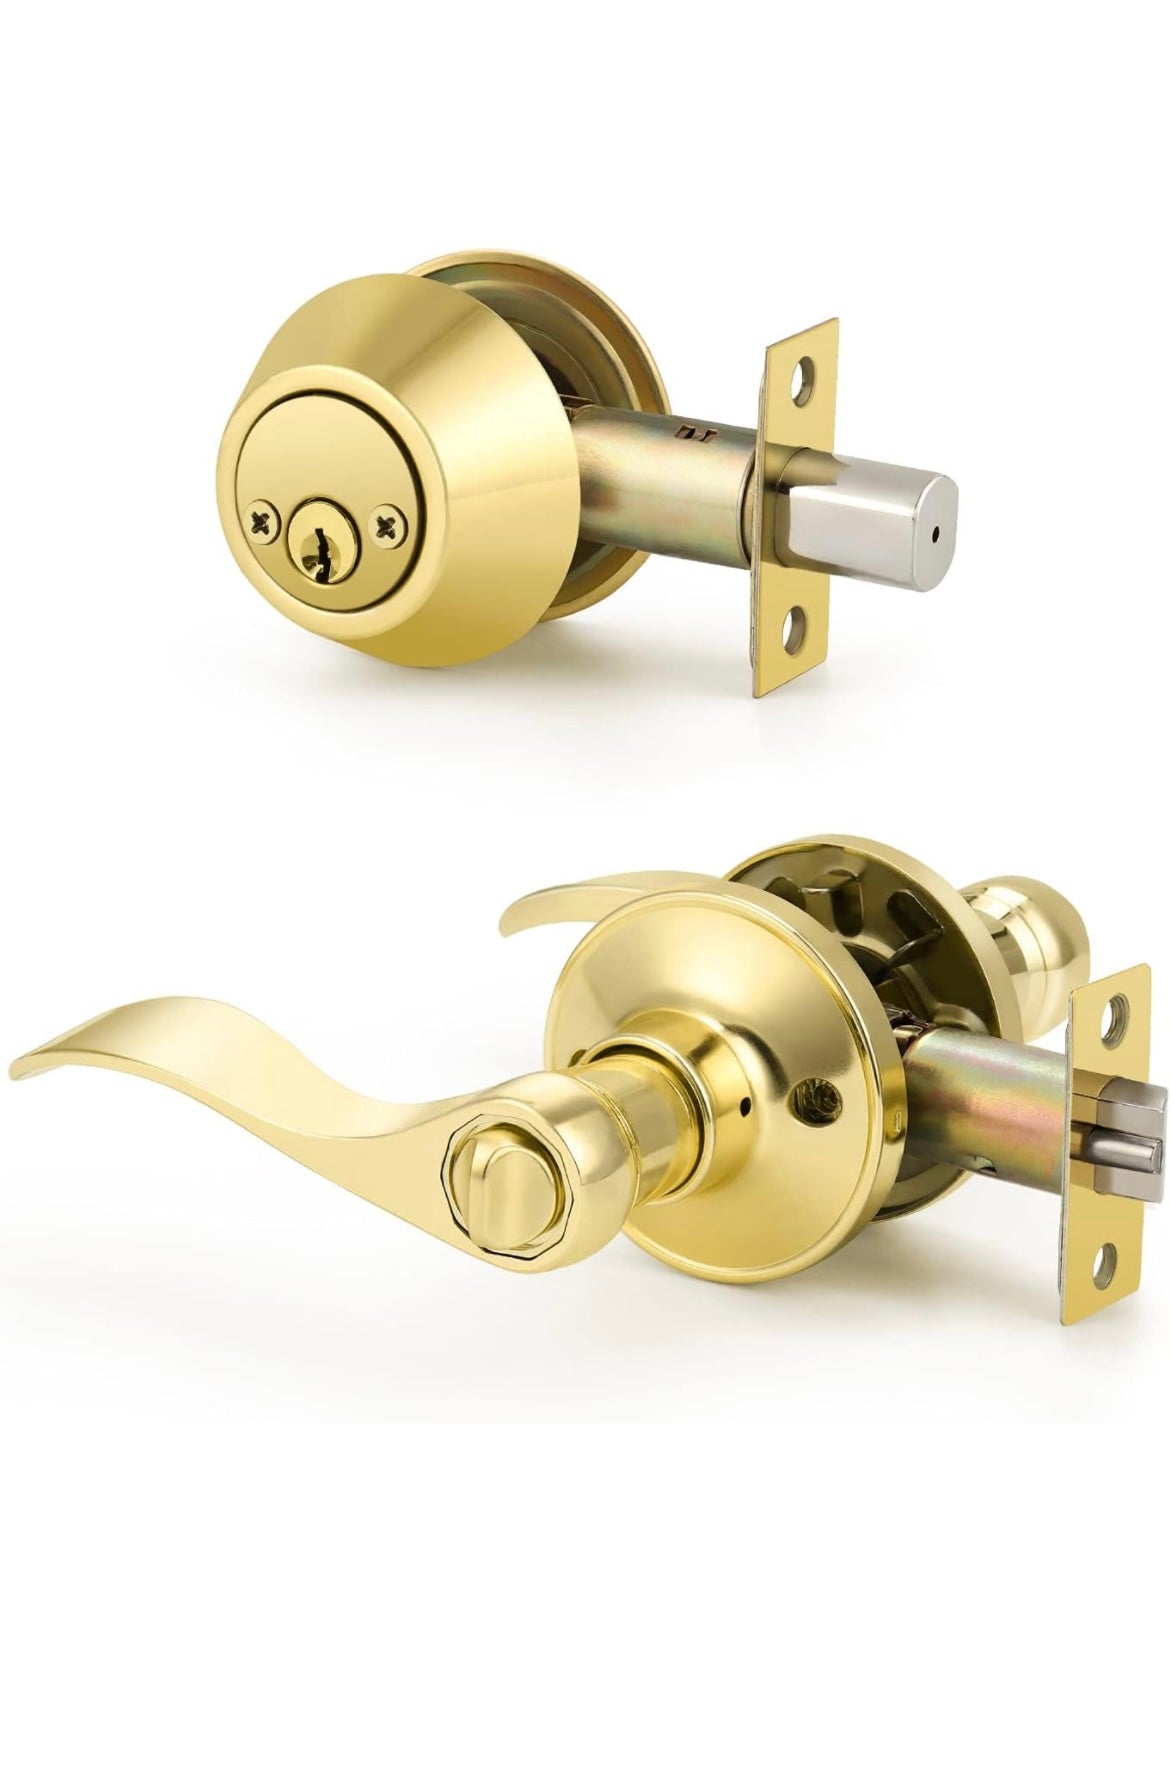 Keyed Alike Entry Door Levers with Double Cylinder Deadbolt Lock Set Same key